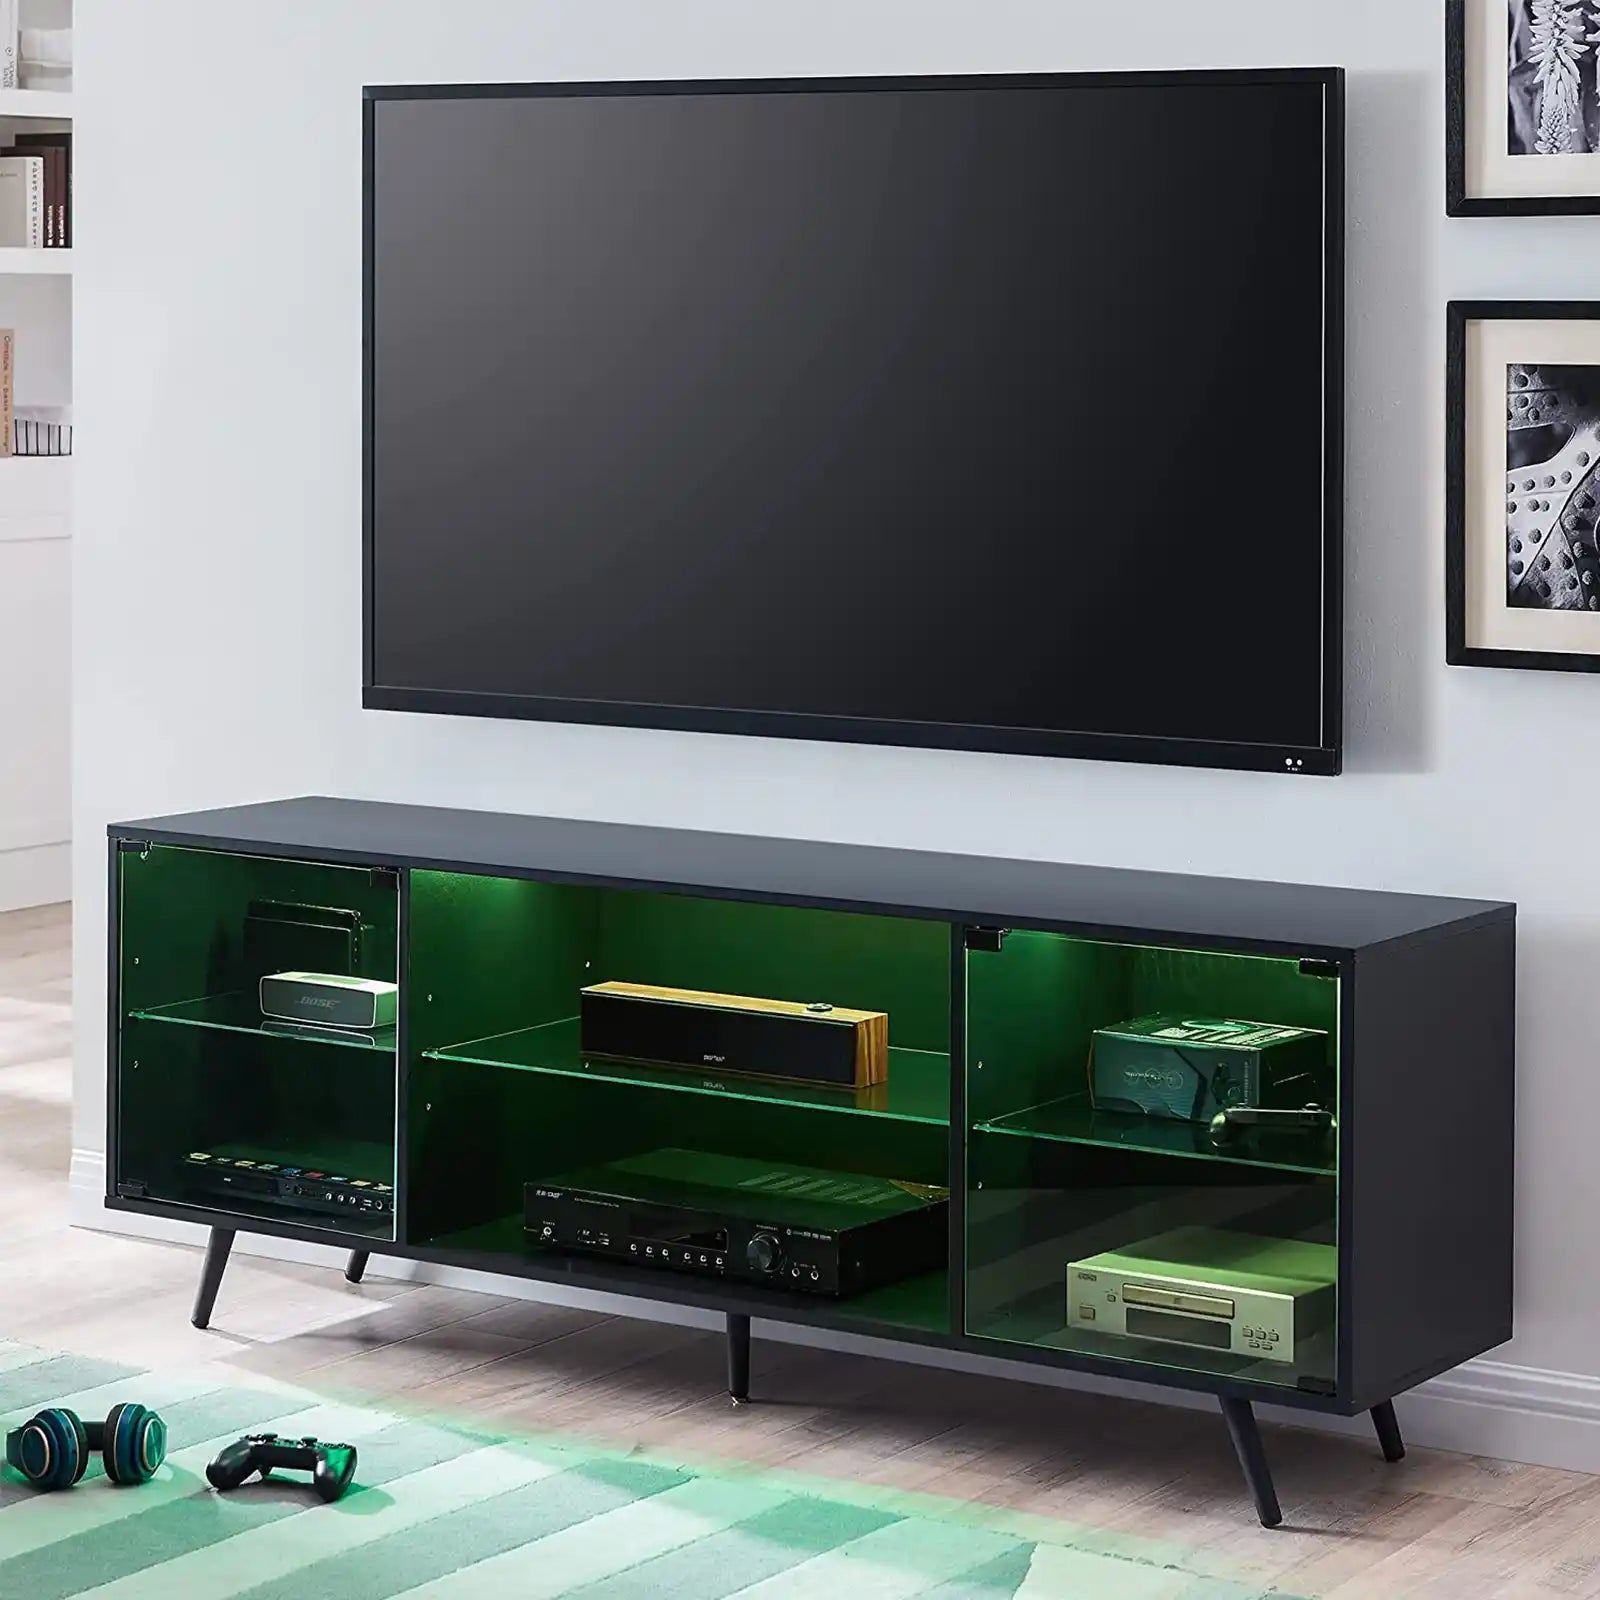 Soporte de TV moderno para TV de 75 pulgadas con luces LED, soportes de televisión para consola multimedia de centro de entretenimiento para juegos